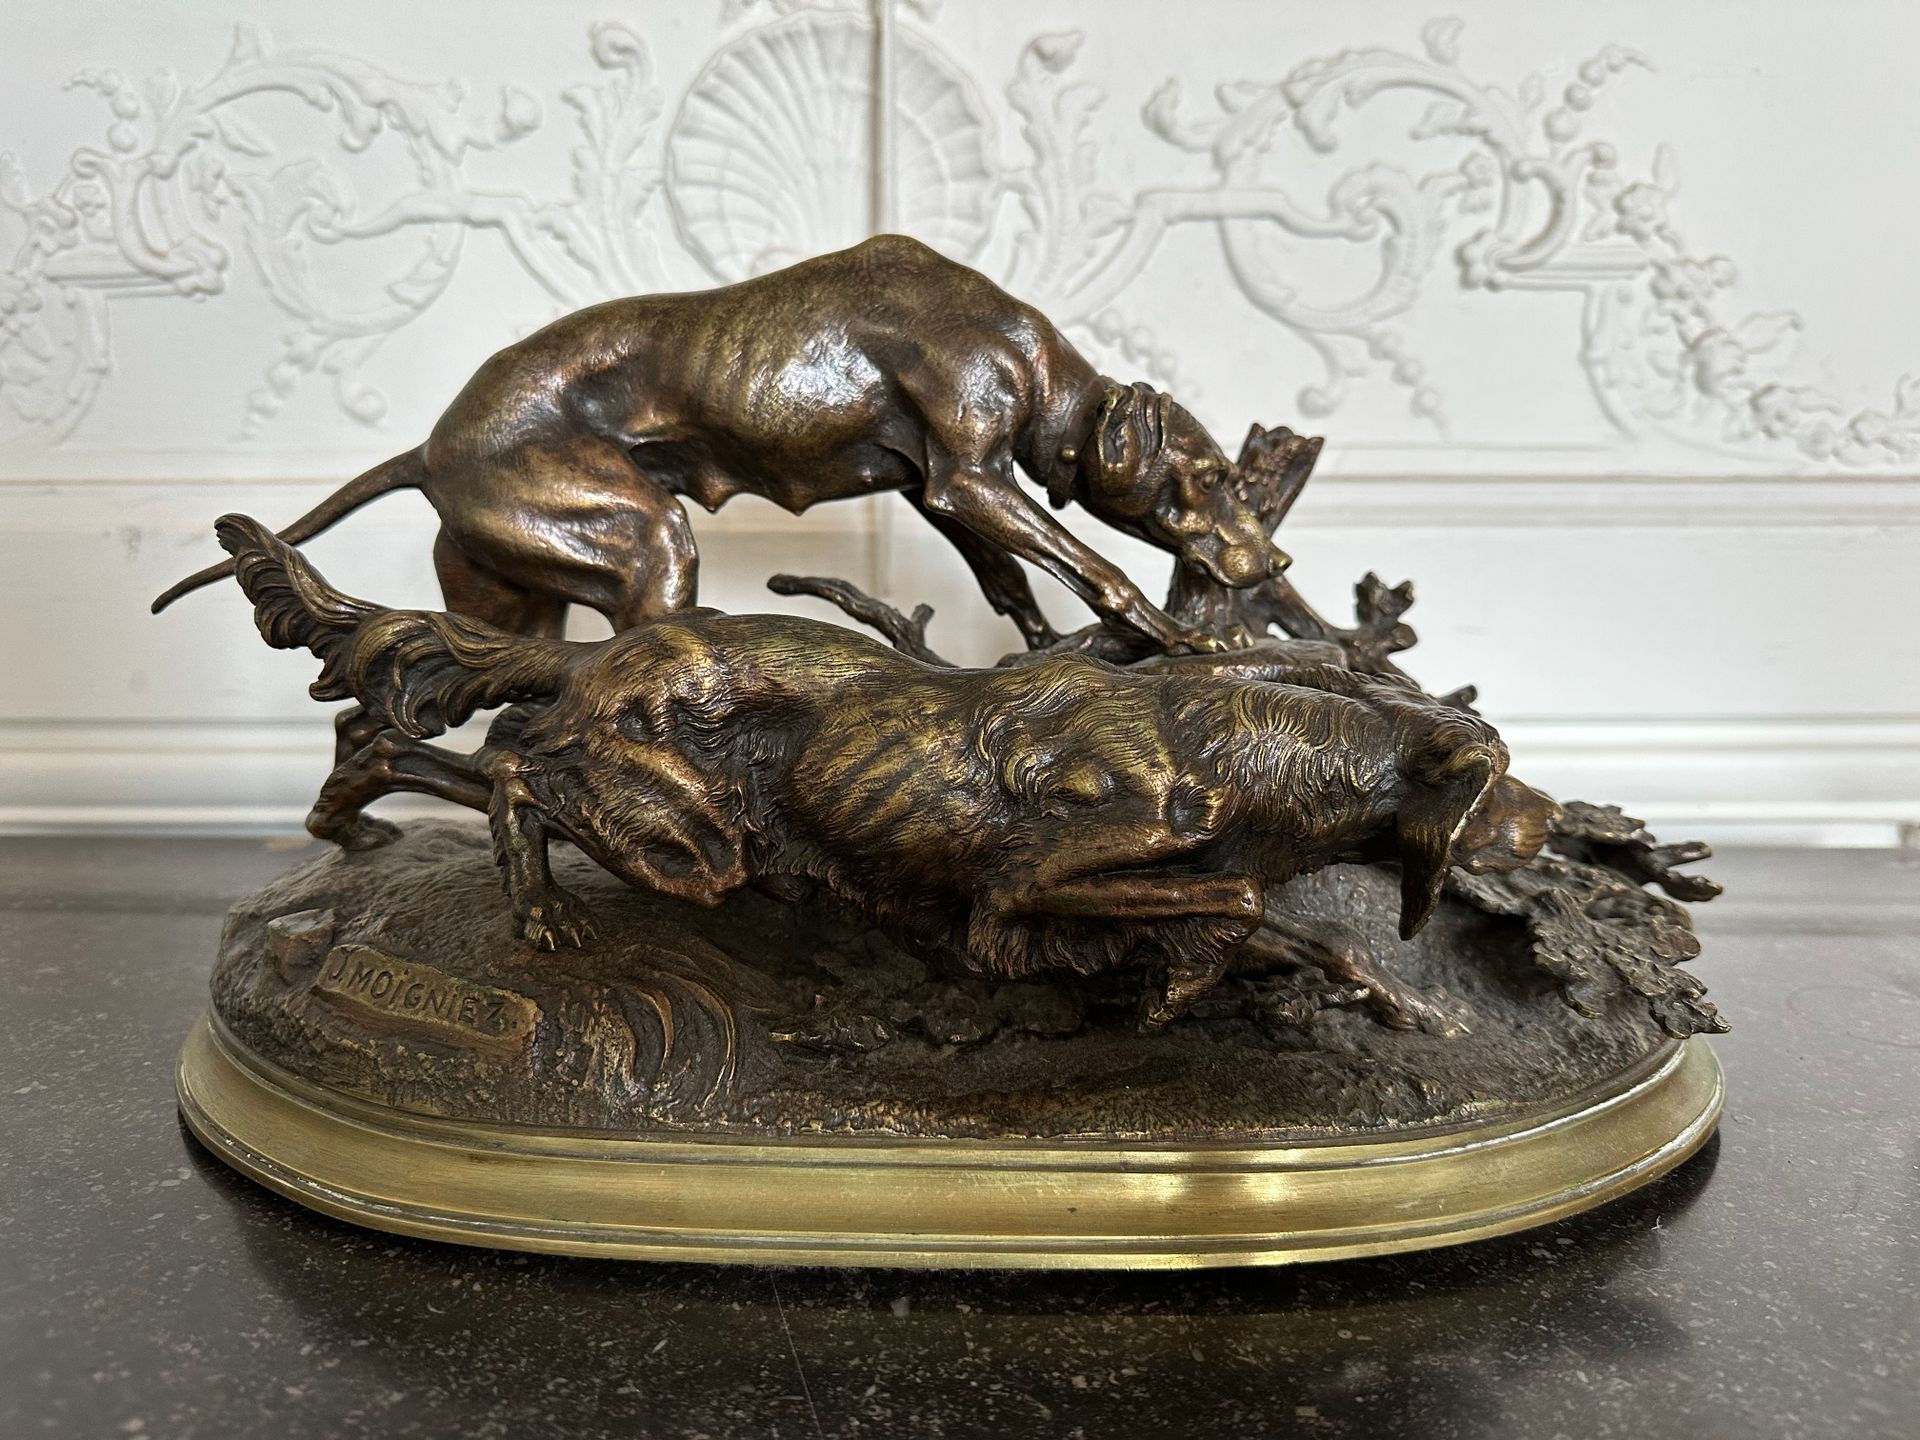 Null 儒勒-莫尼耶斯 (1835-1894)
两只狗在寻找野兔
棕色铜锈的青铜器，平台上有签名
20 x 36 x 16厘米
(铜锈磨损)